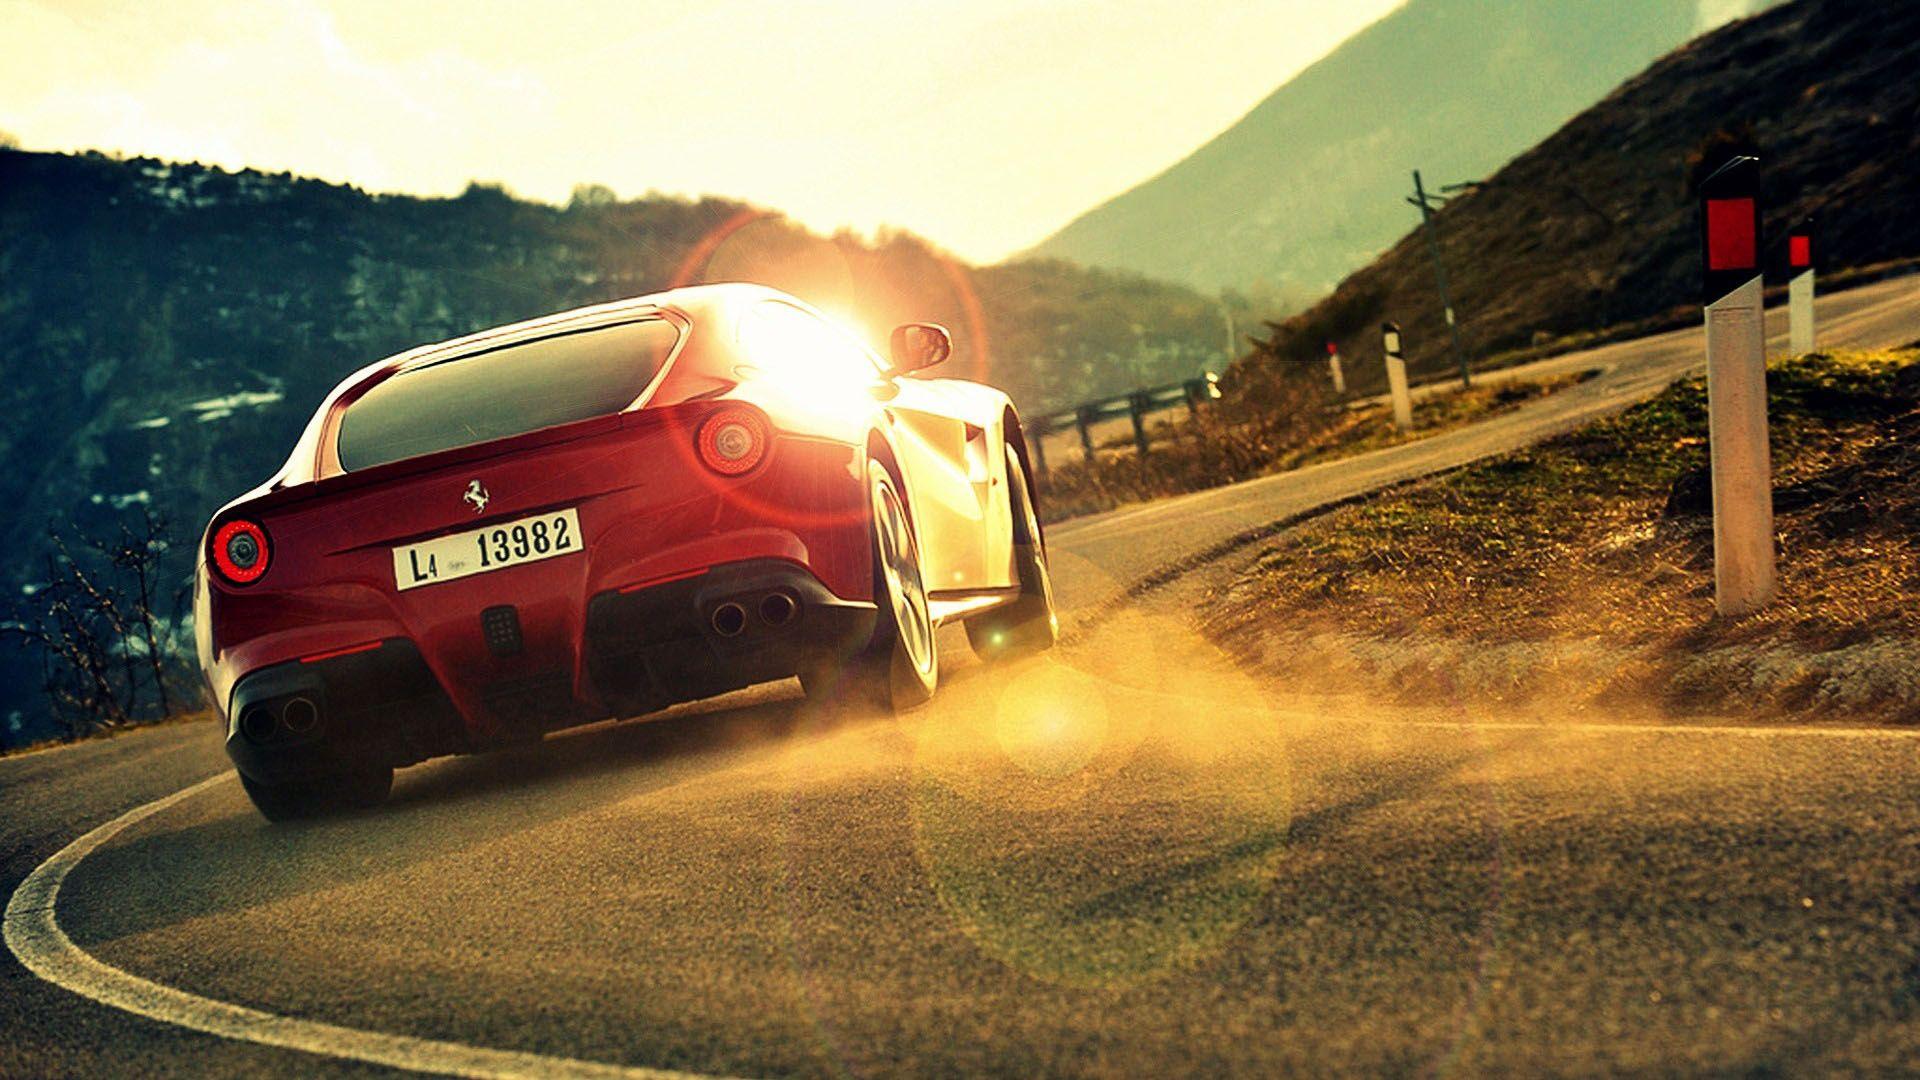 Ferrari f12 berlinetta HD wallpaper high resolution download